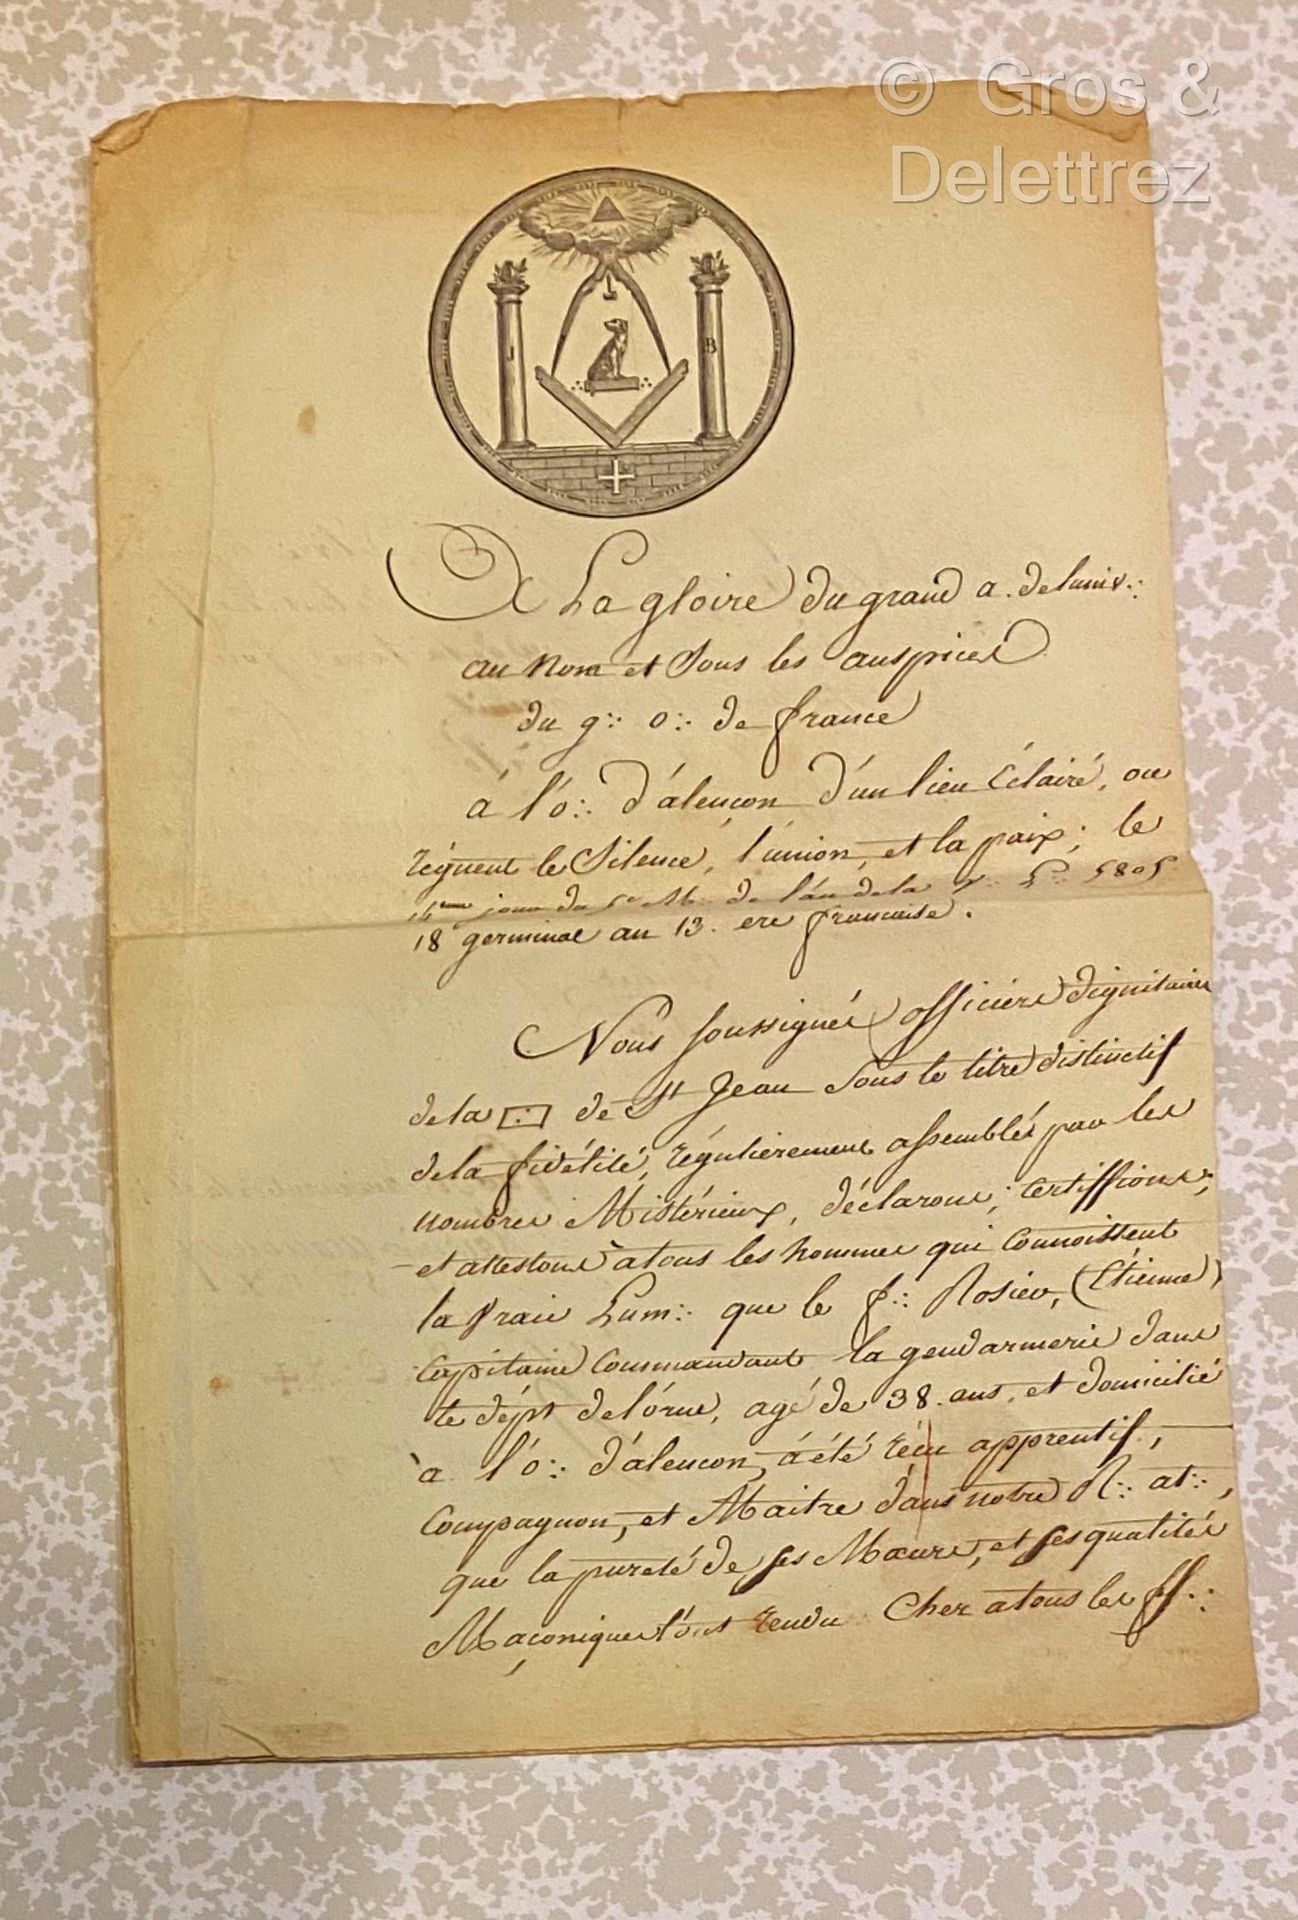 Null "共济会］

证明居住在阿朗松的奥恩省宪兵队队长艾蒂安-罗西埃（Etienne Rosier）获得学徒、伙伴和共济会大师的证书手稿。

该文件以印刷的&hellip;